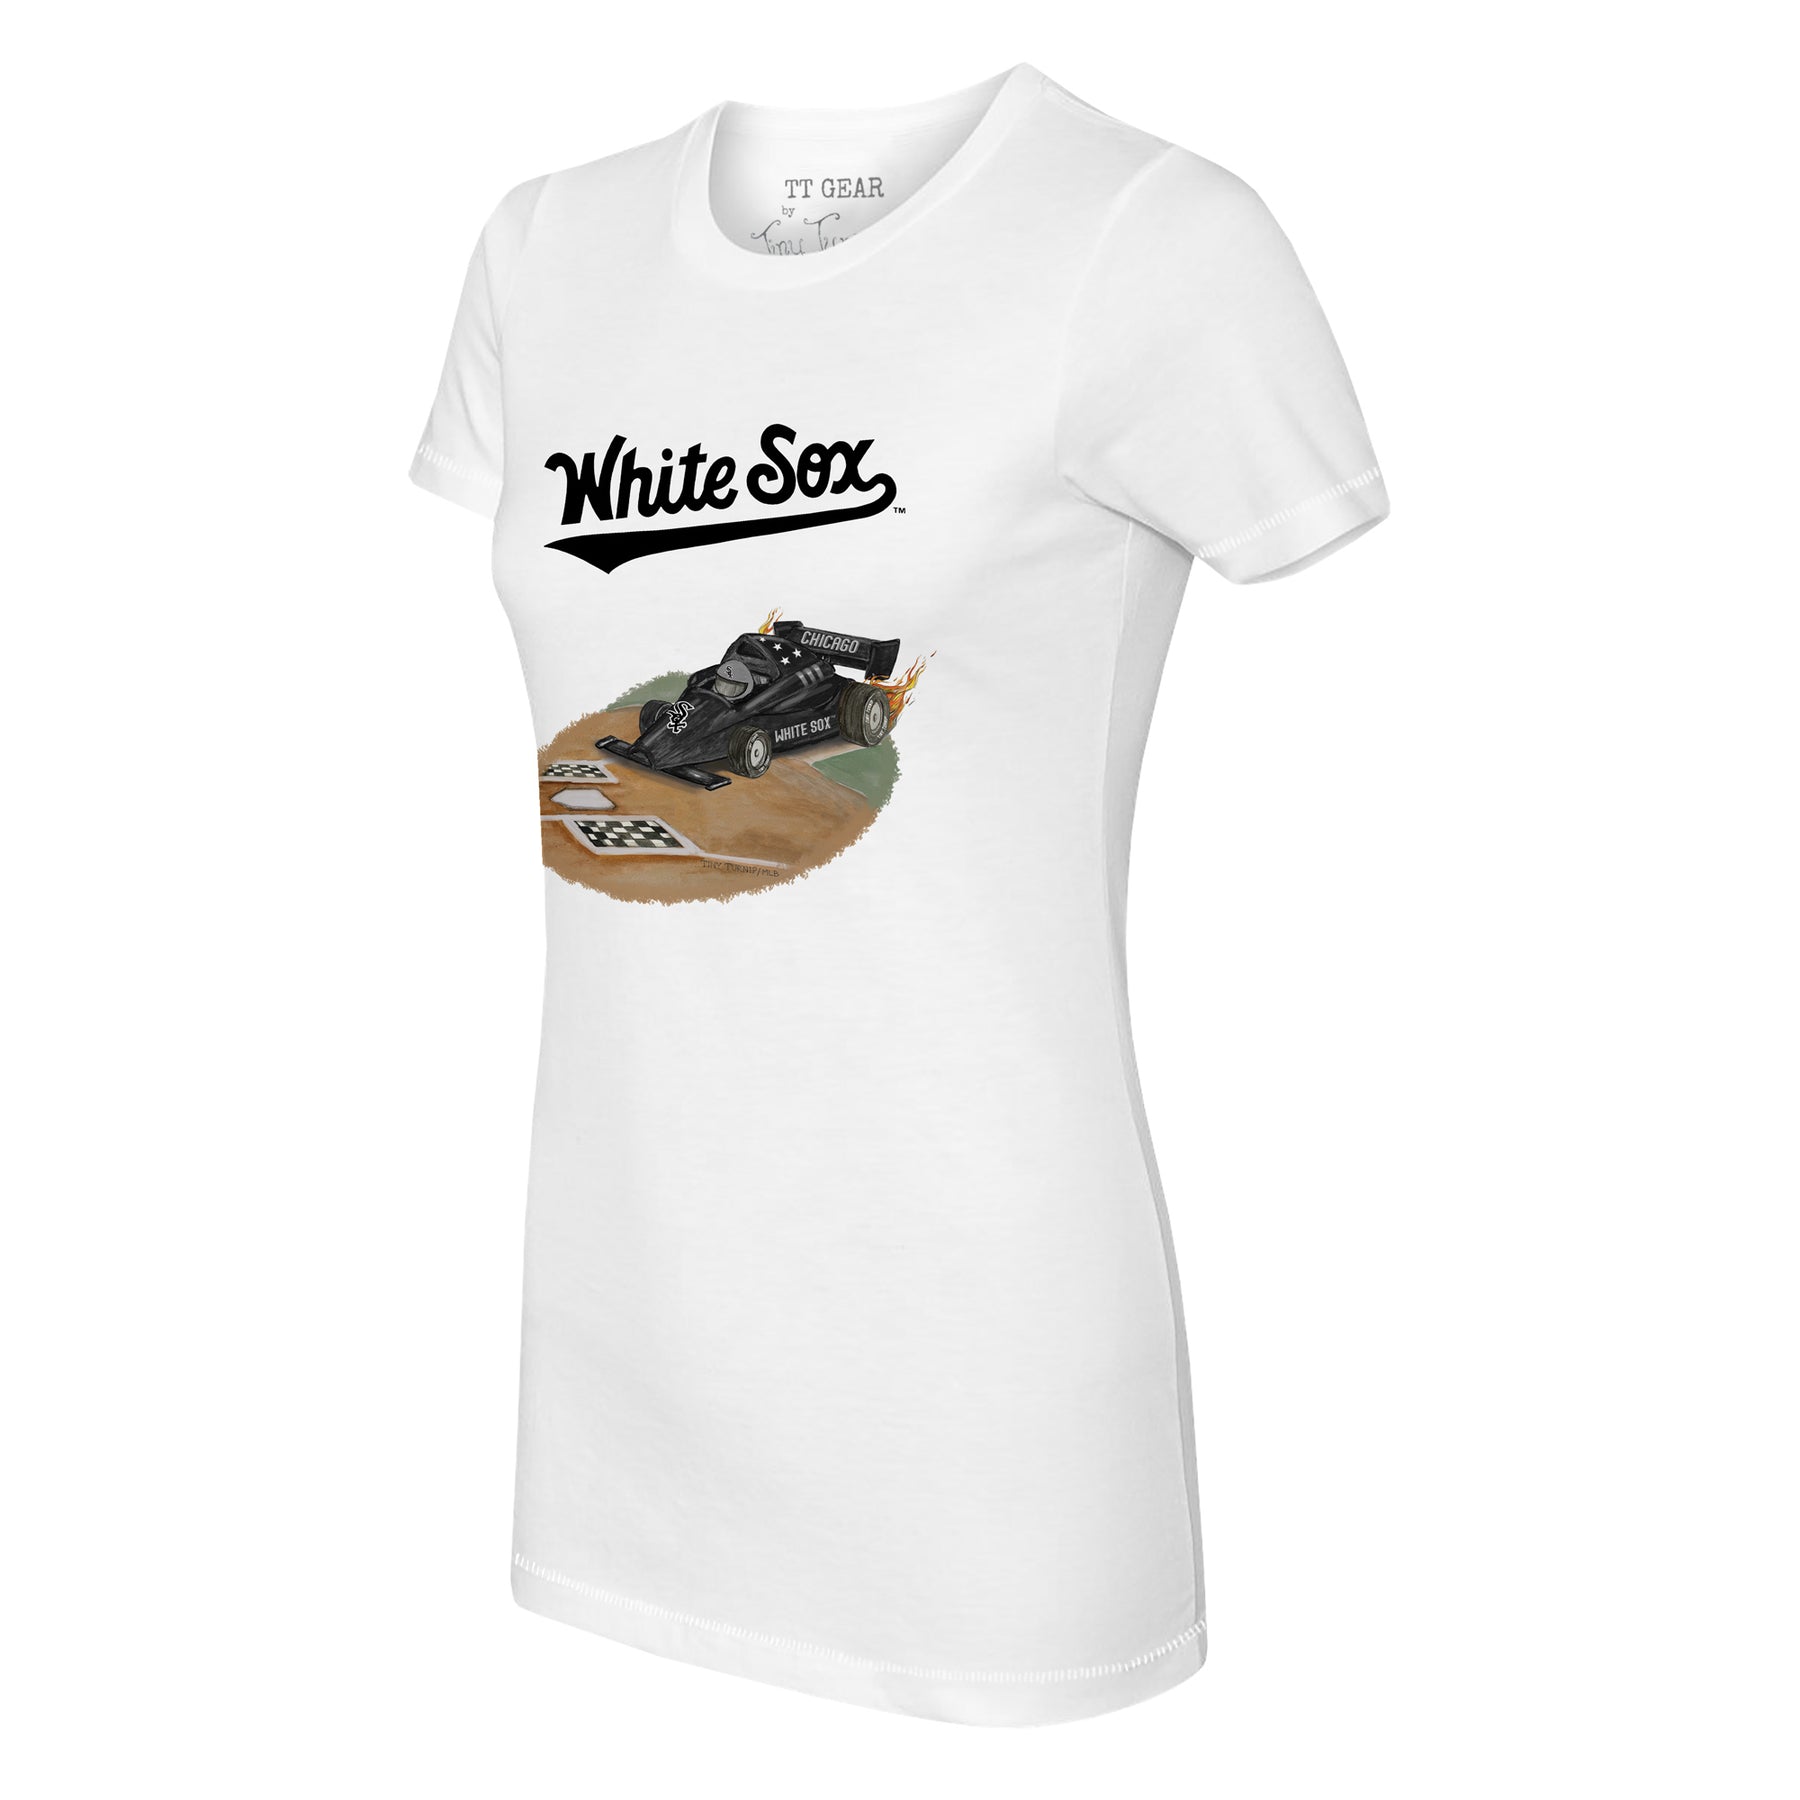 Chicago White Sox Race Car Tee Shirt